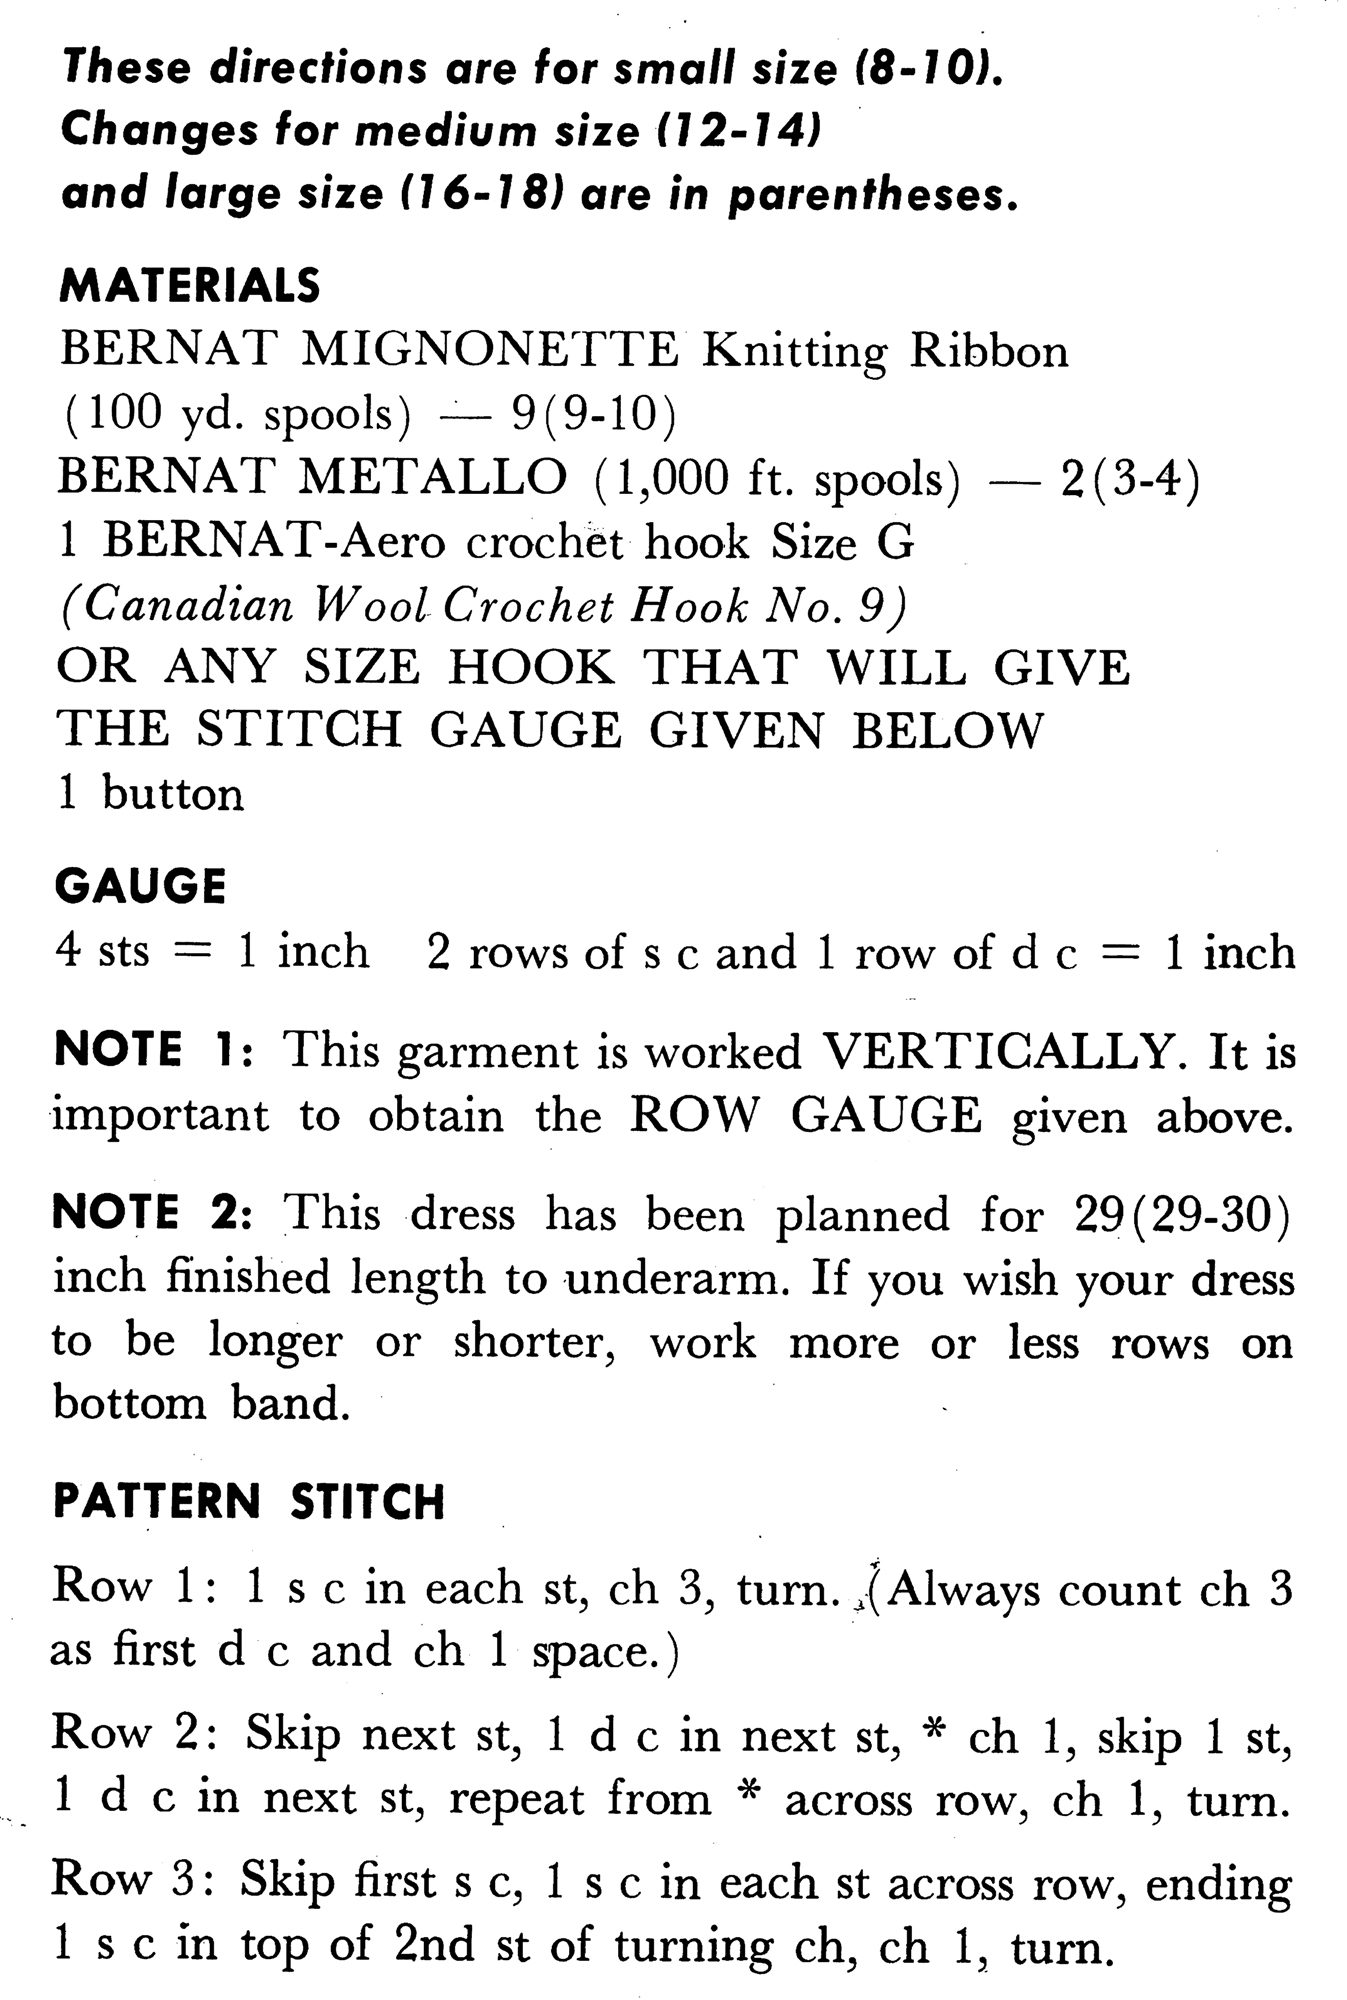 Vintage Crochet Shift Dress Pattern Bust 33-41 Inches